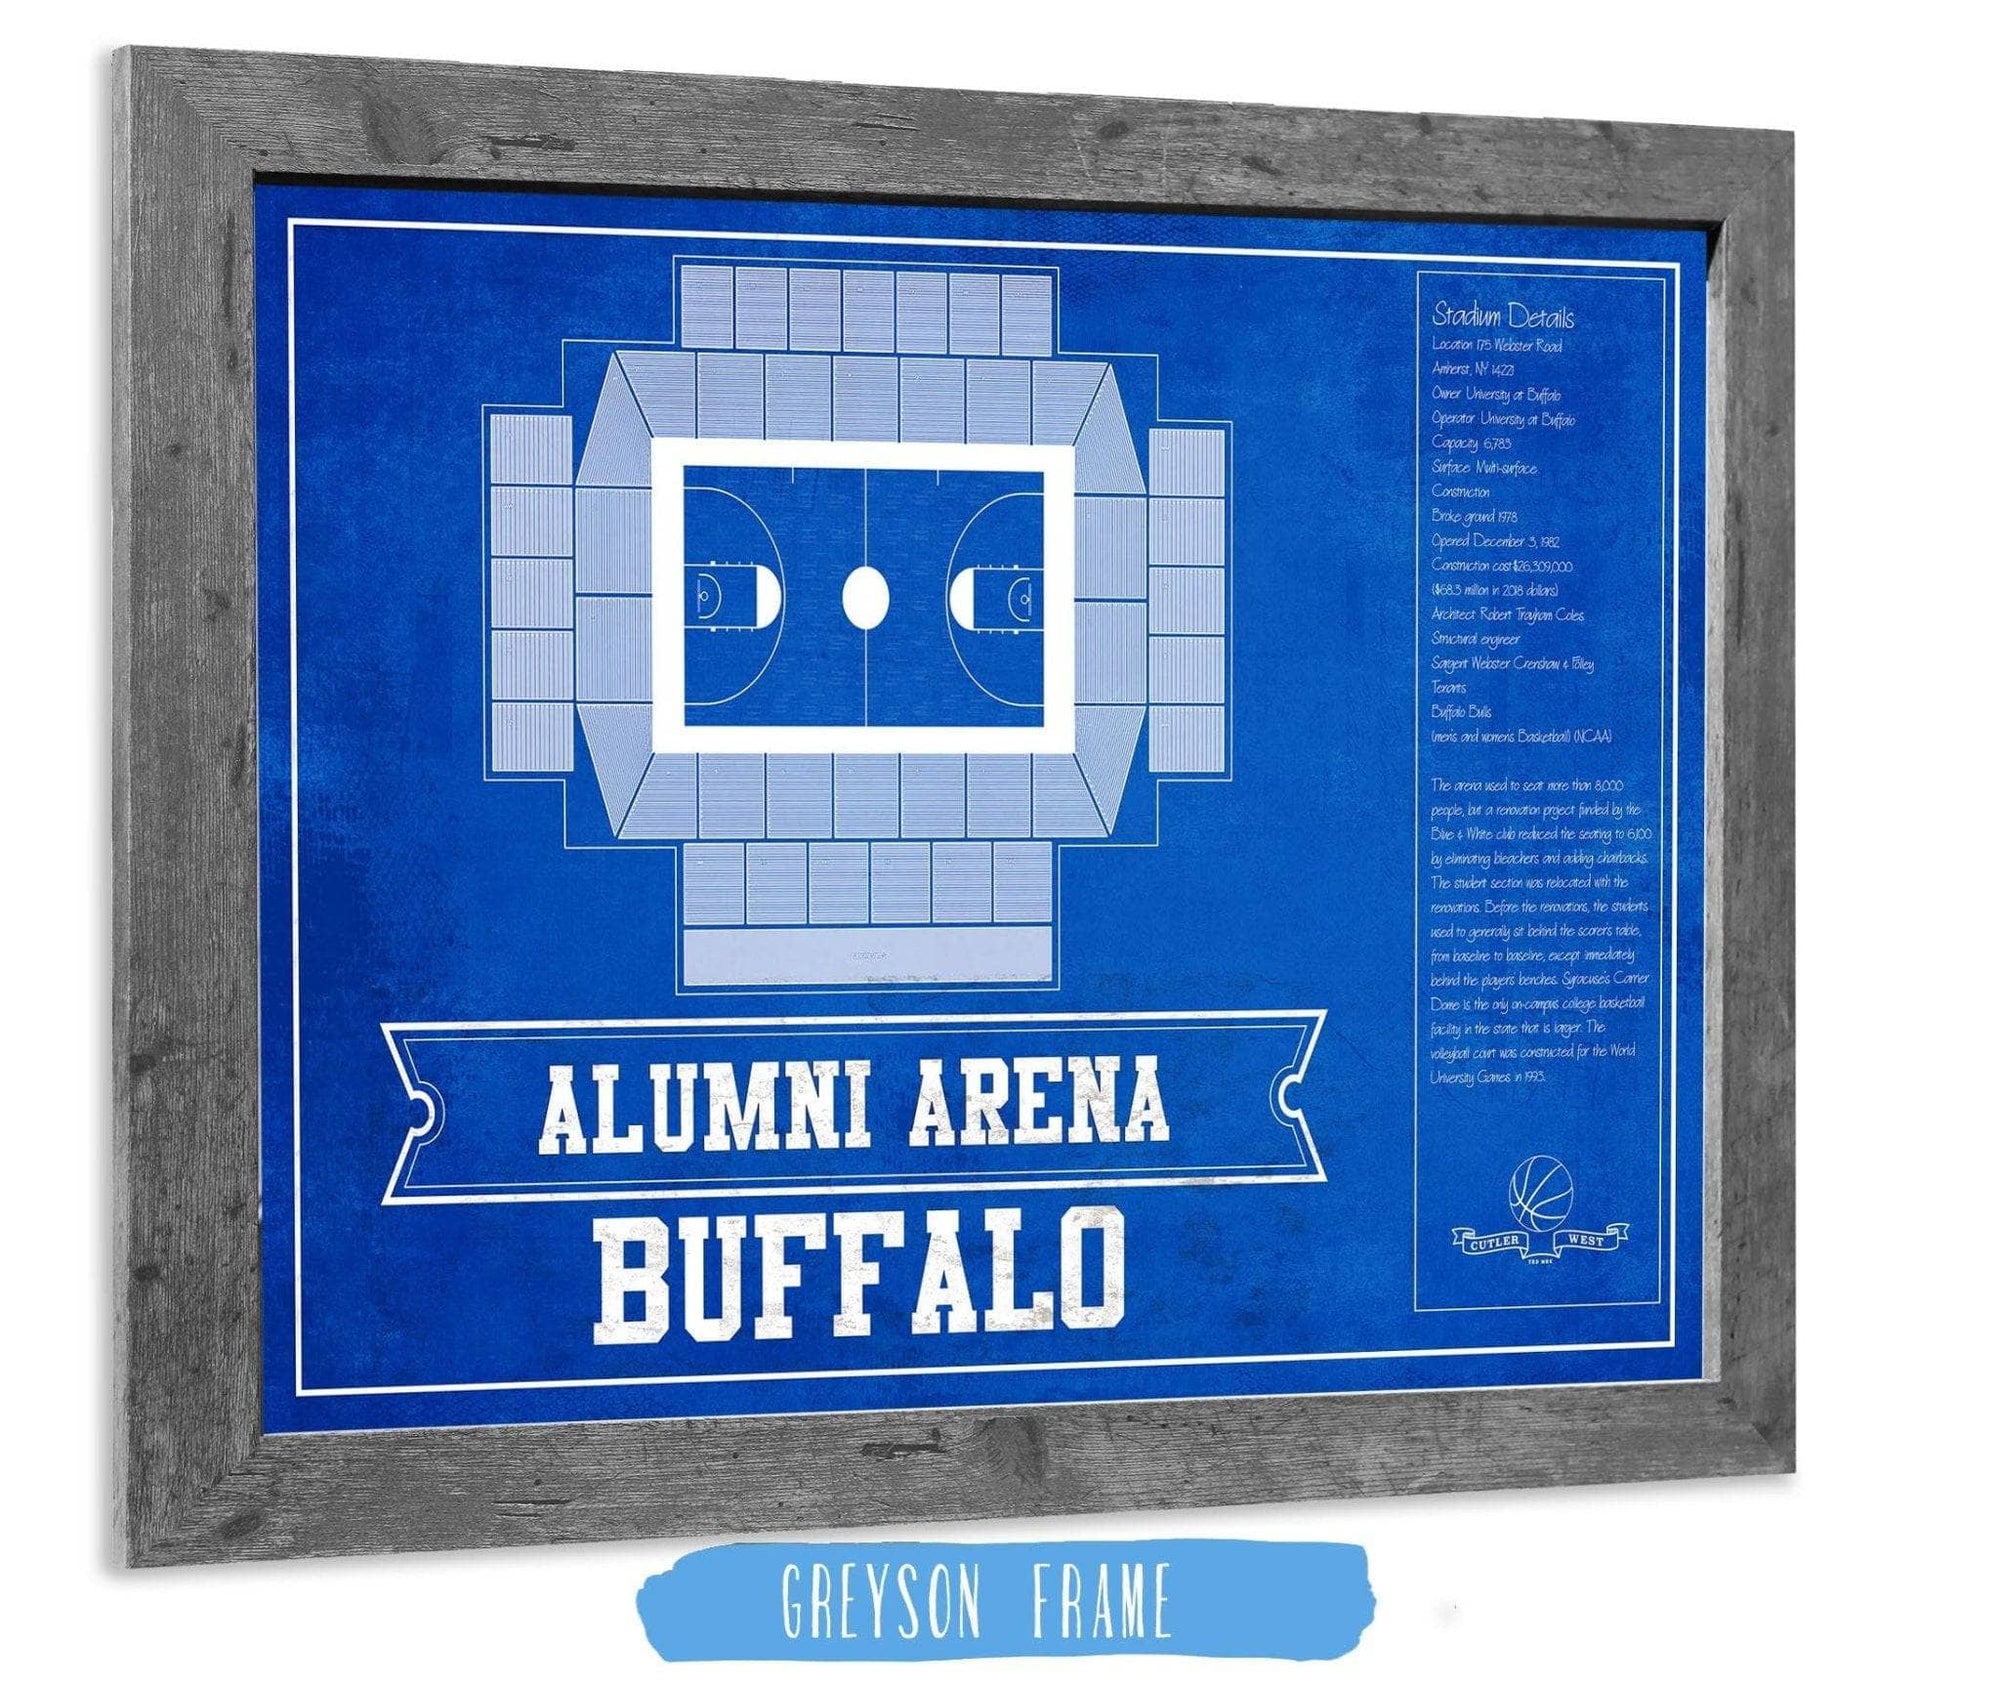 Cutler West Basketball Collection 14" x 11" / Greyson Frame Alumni Arena Buffalo Bulls Team Colors NCAA Vintage Basketball Print 933350226_82377